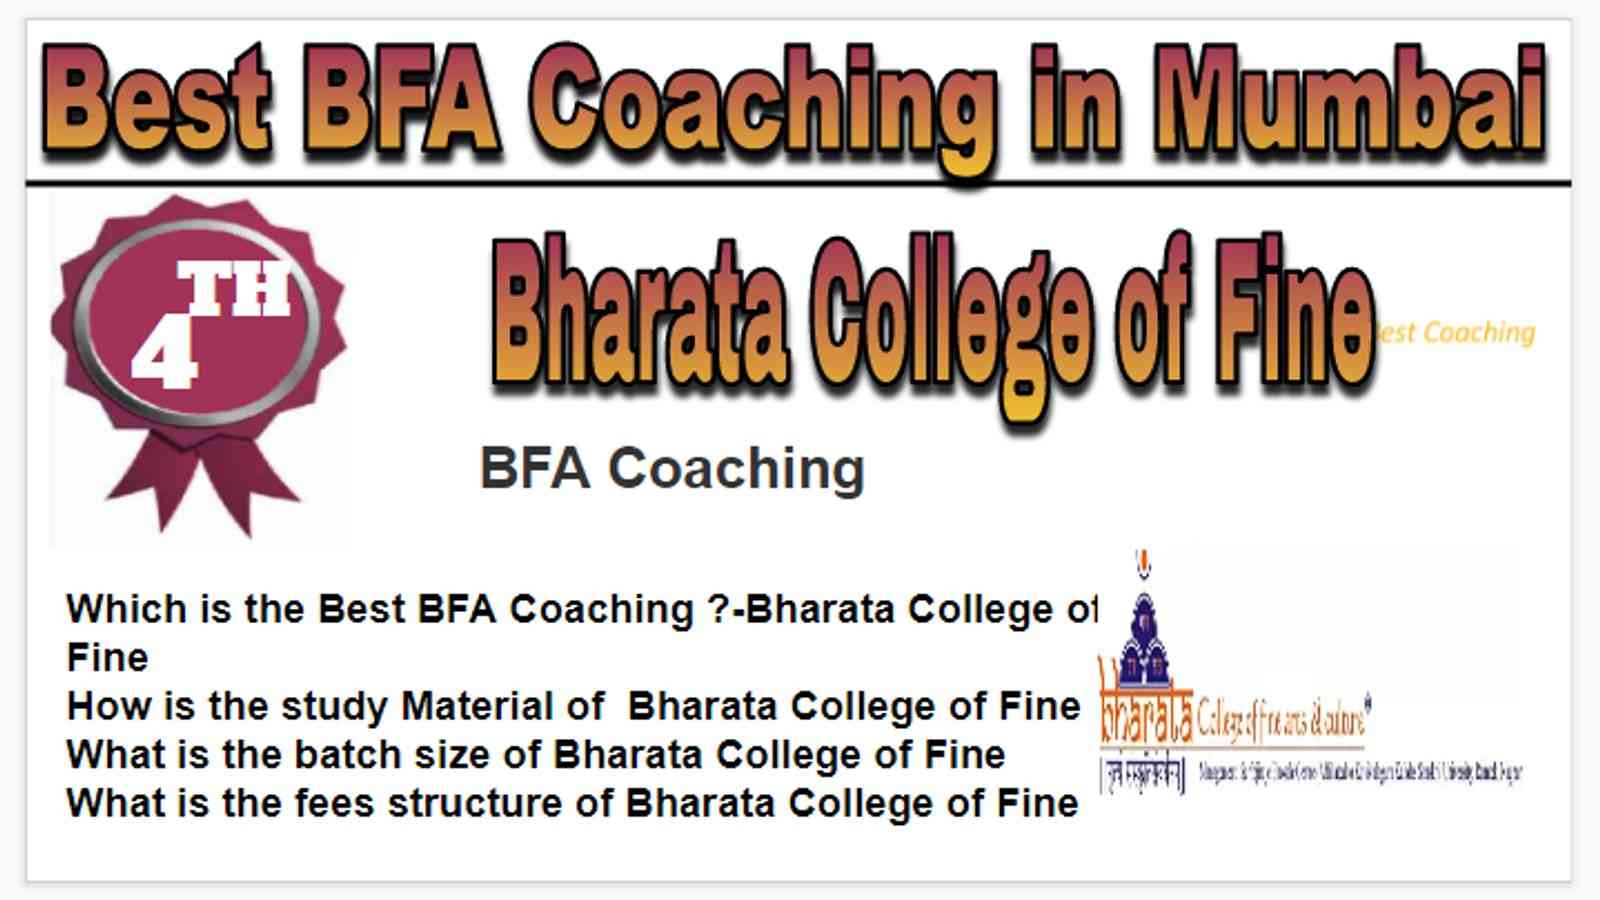 Rank 4 best BFA coaching in Mumbai